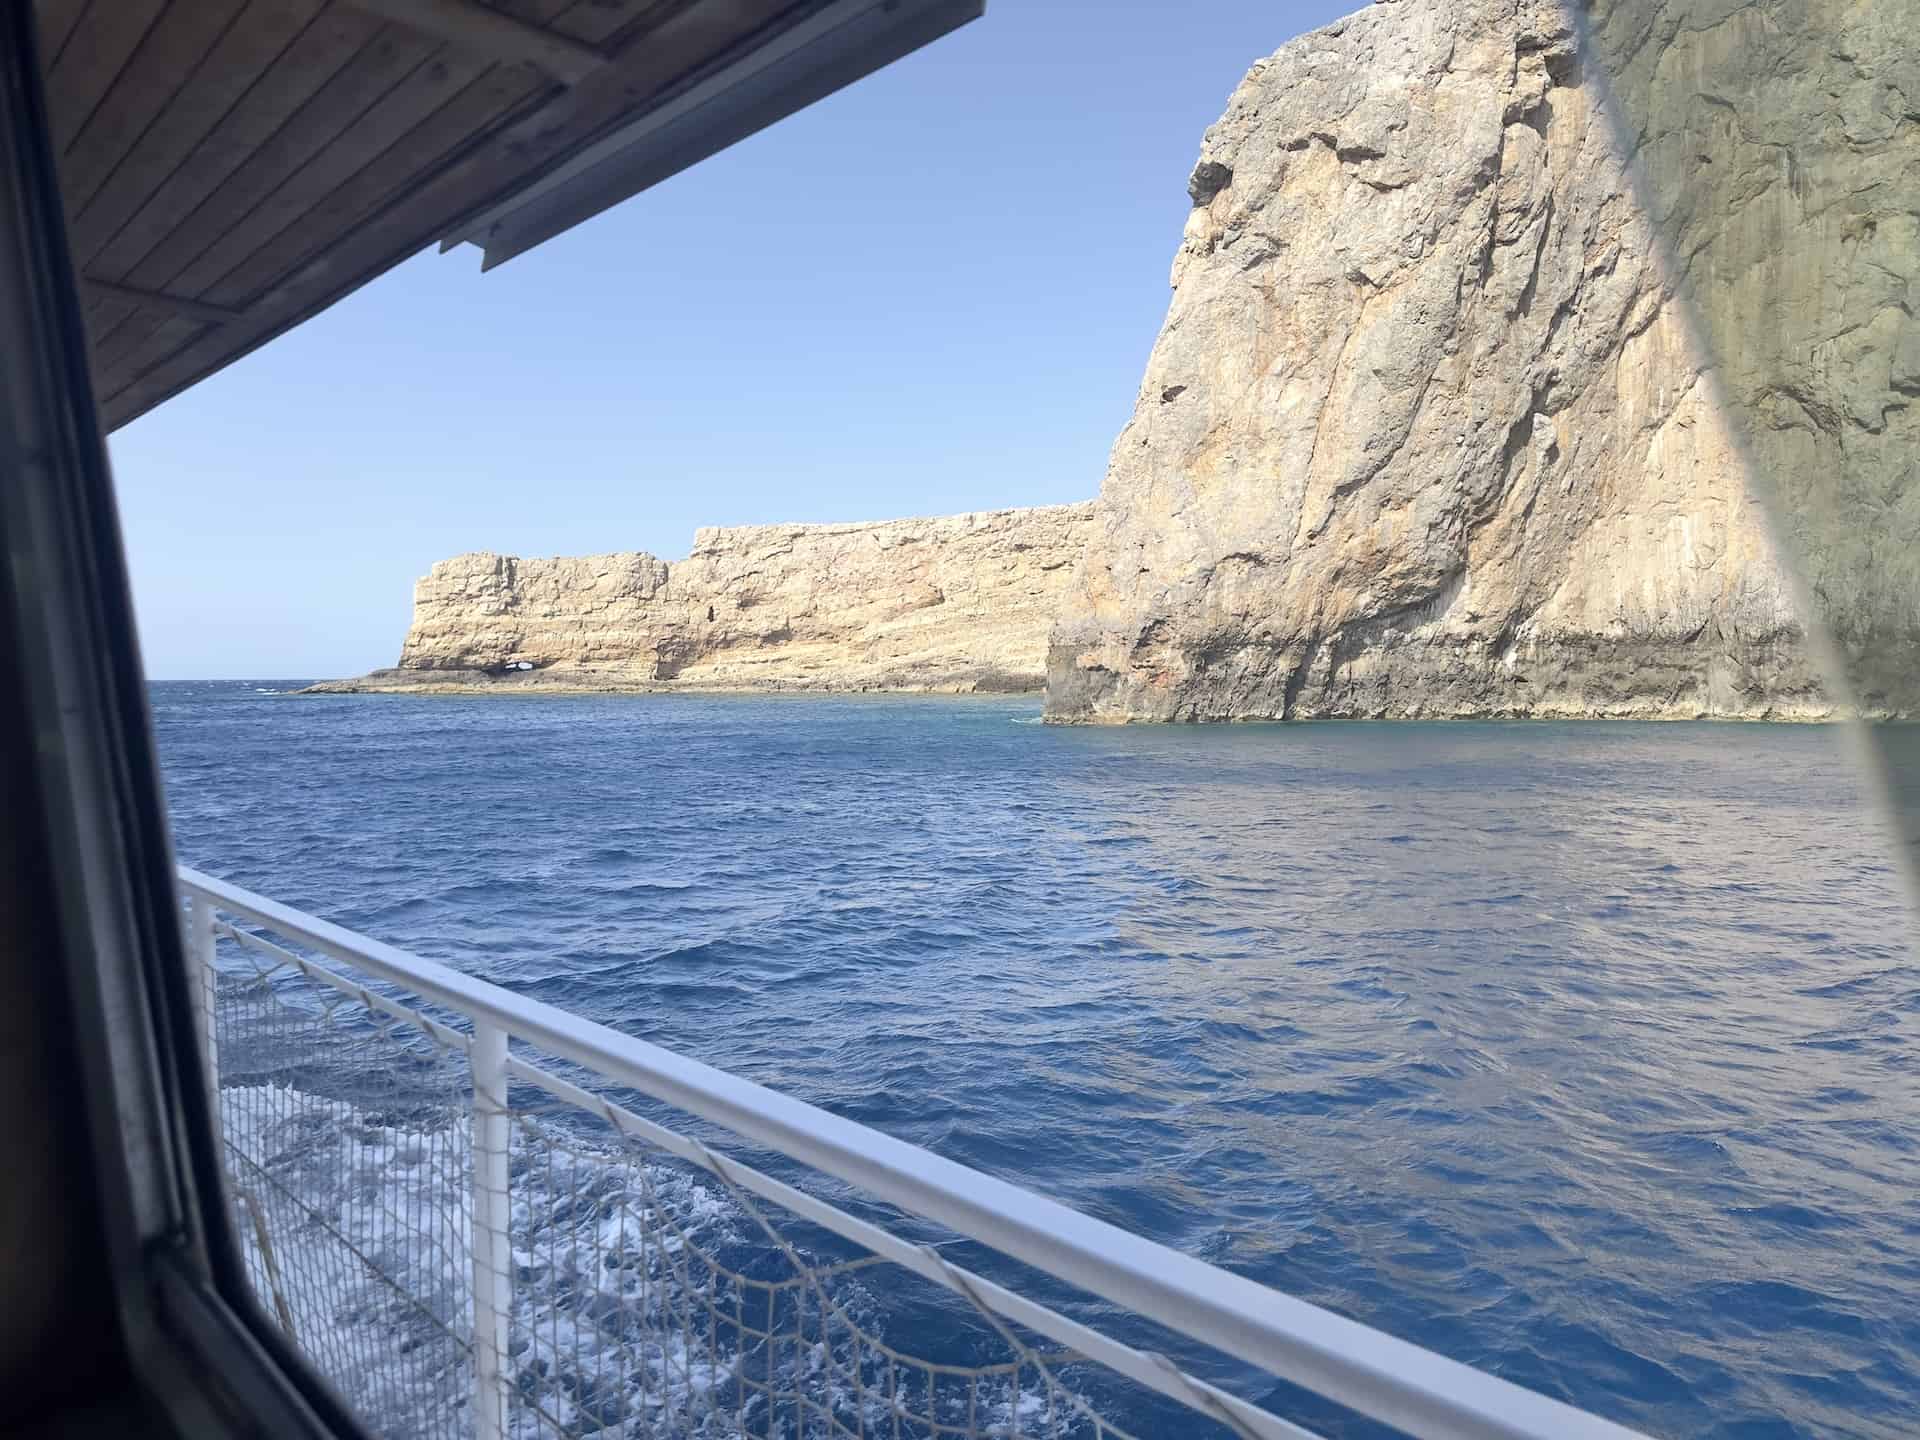 Rounding the northwestern tip of Crete